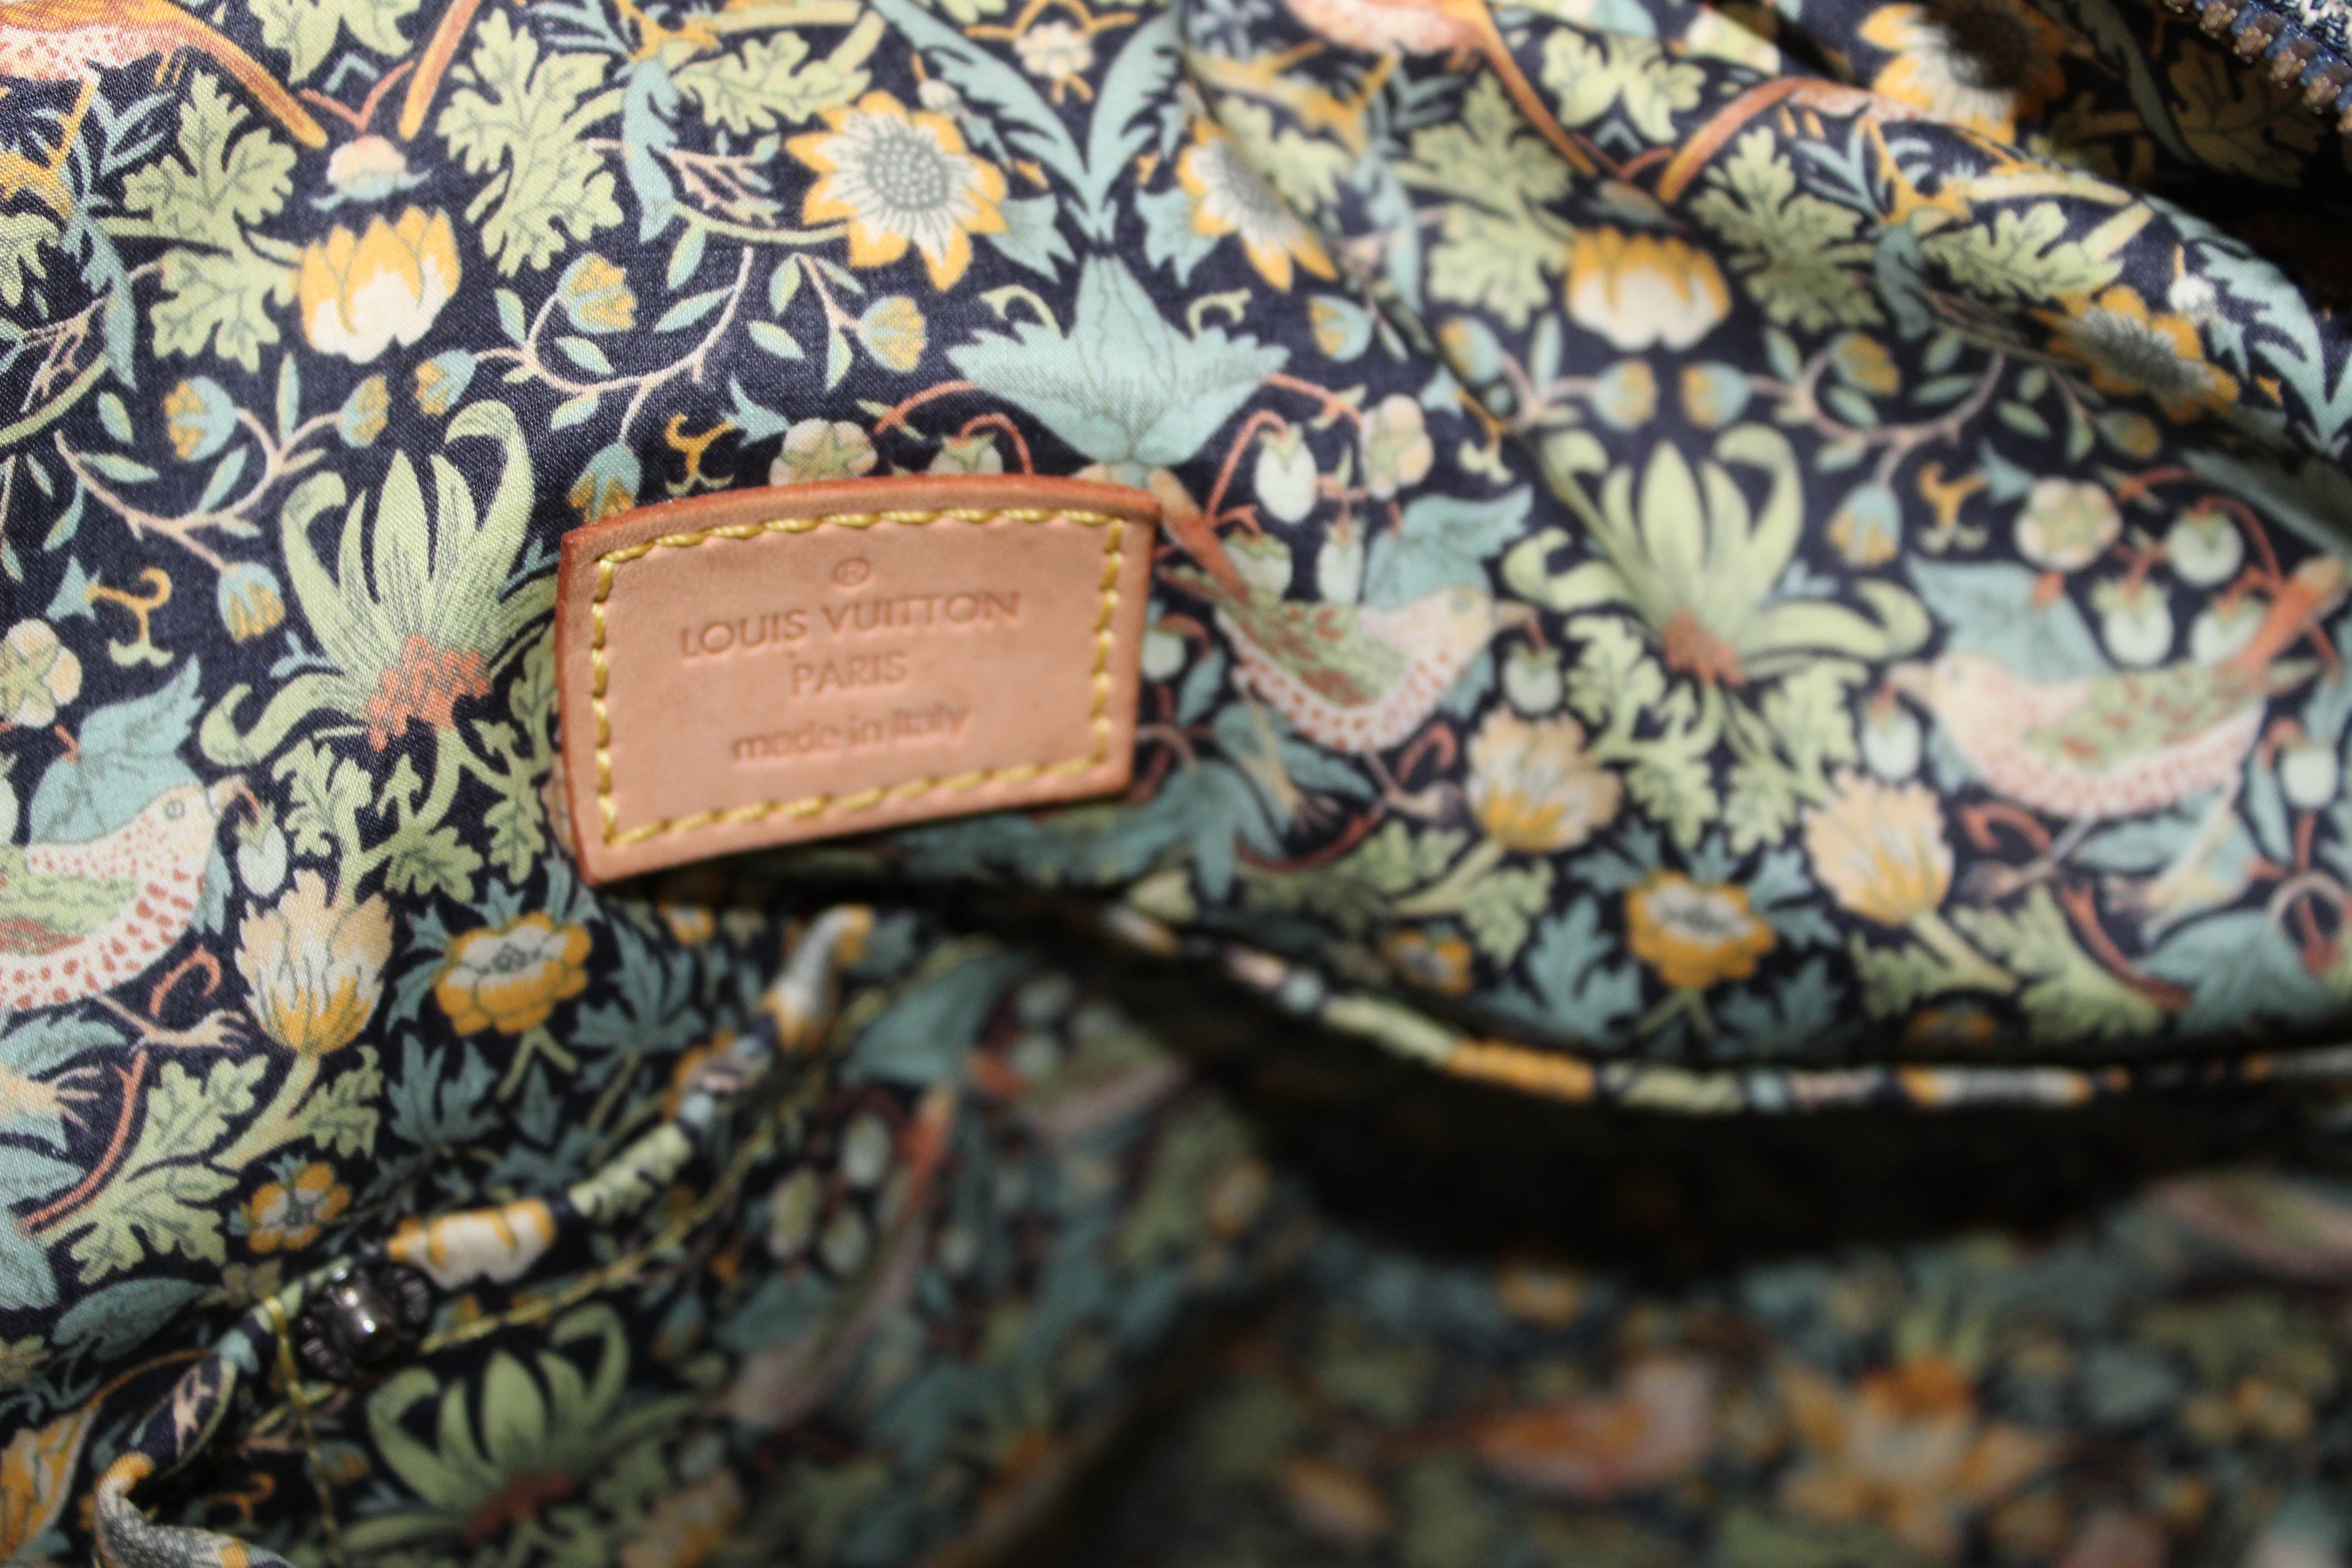 Louis Vuitton Patchwork Bowly Handbag Denim Blue 1378523